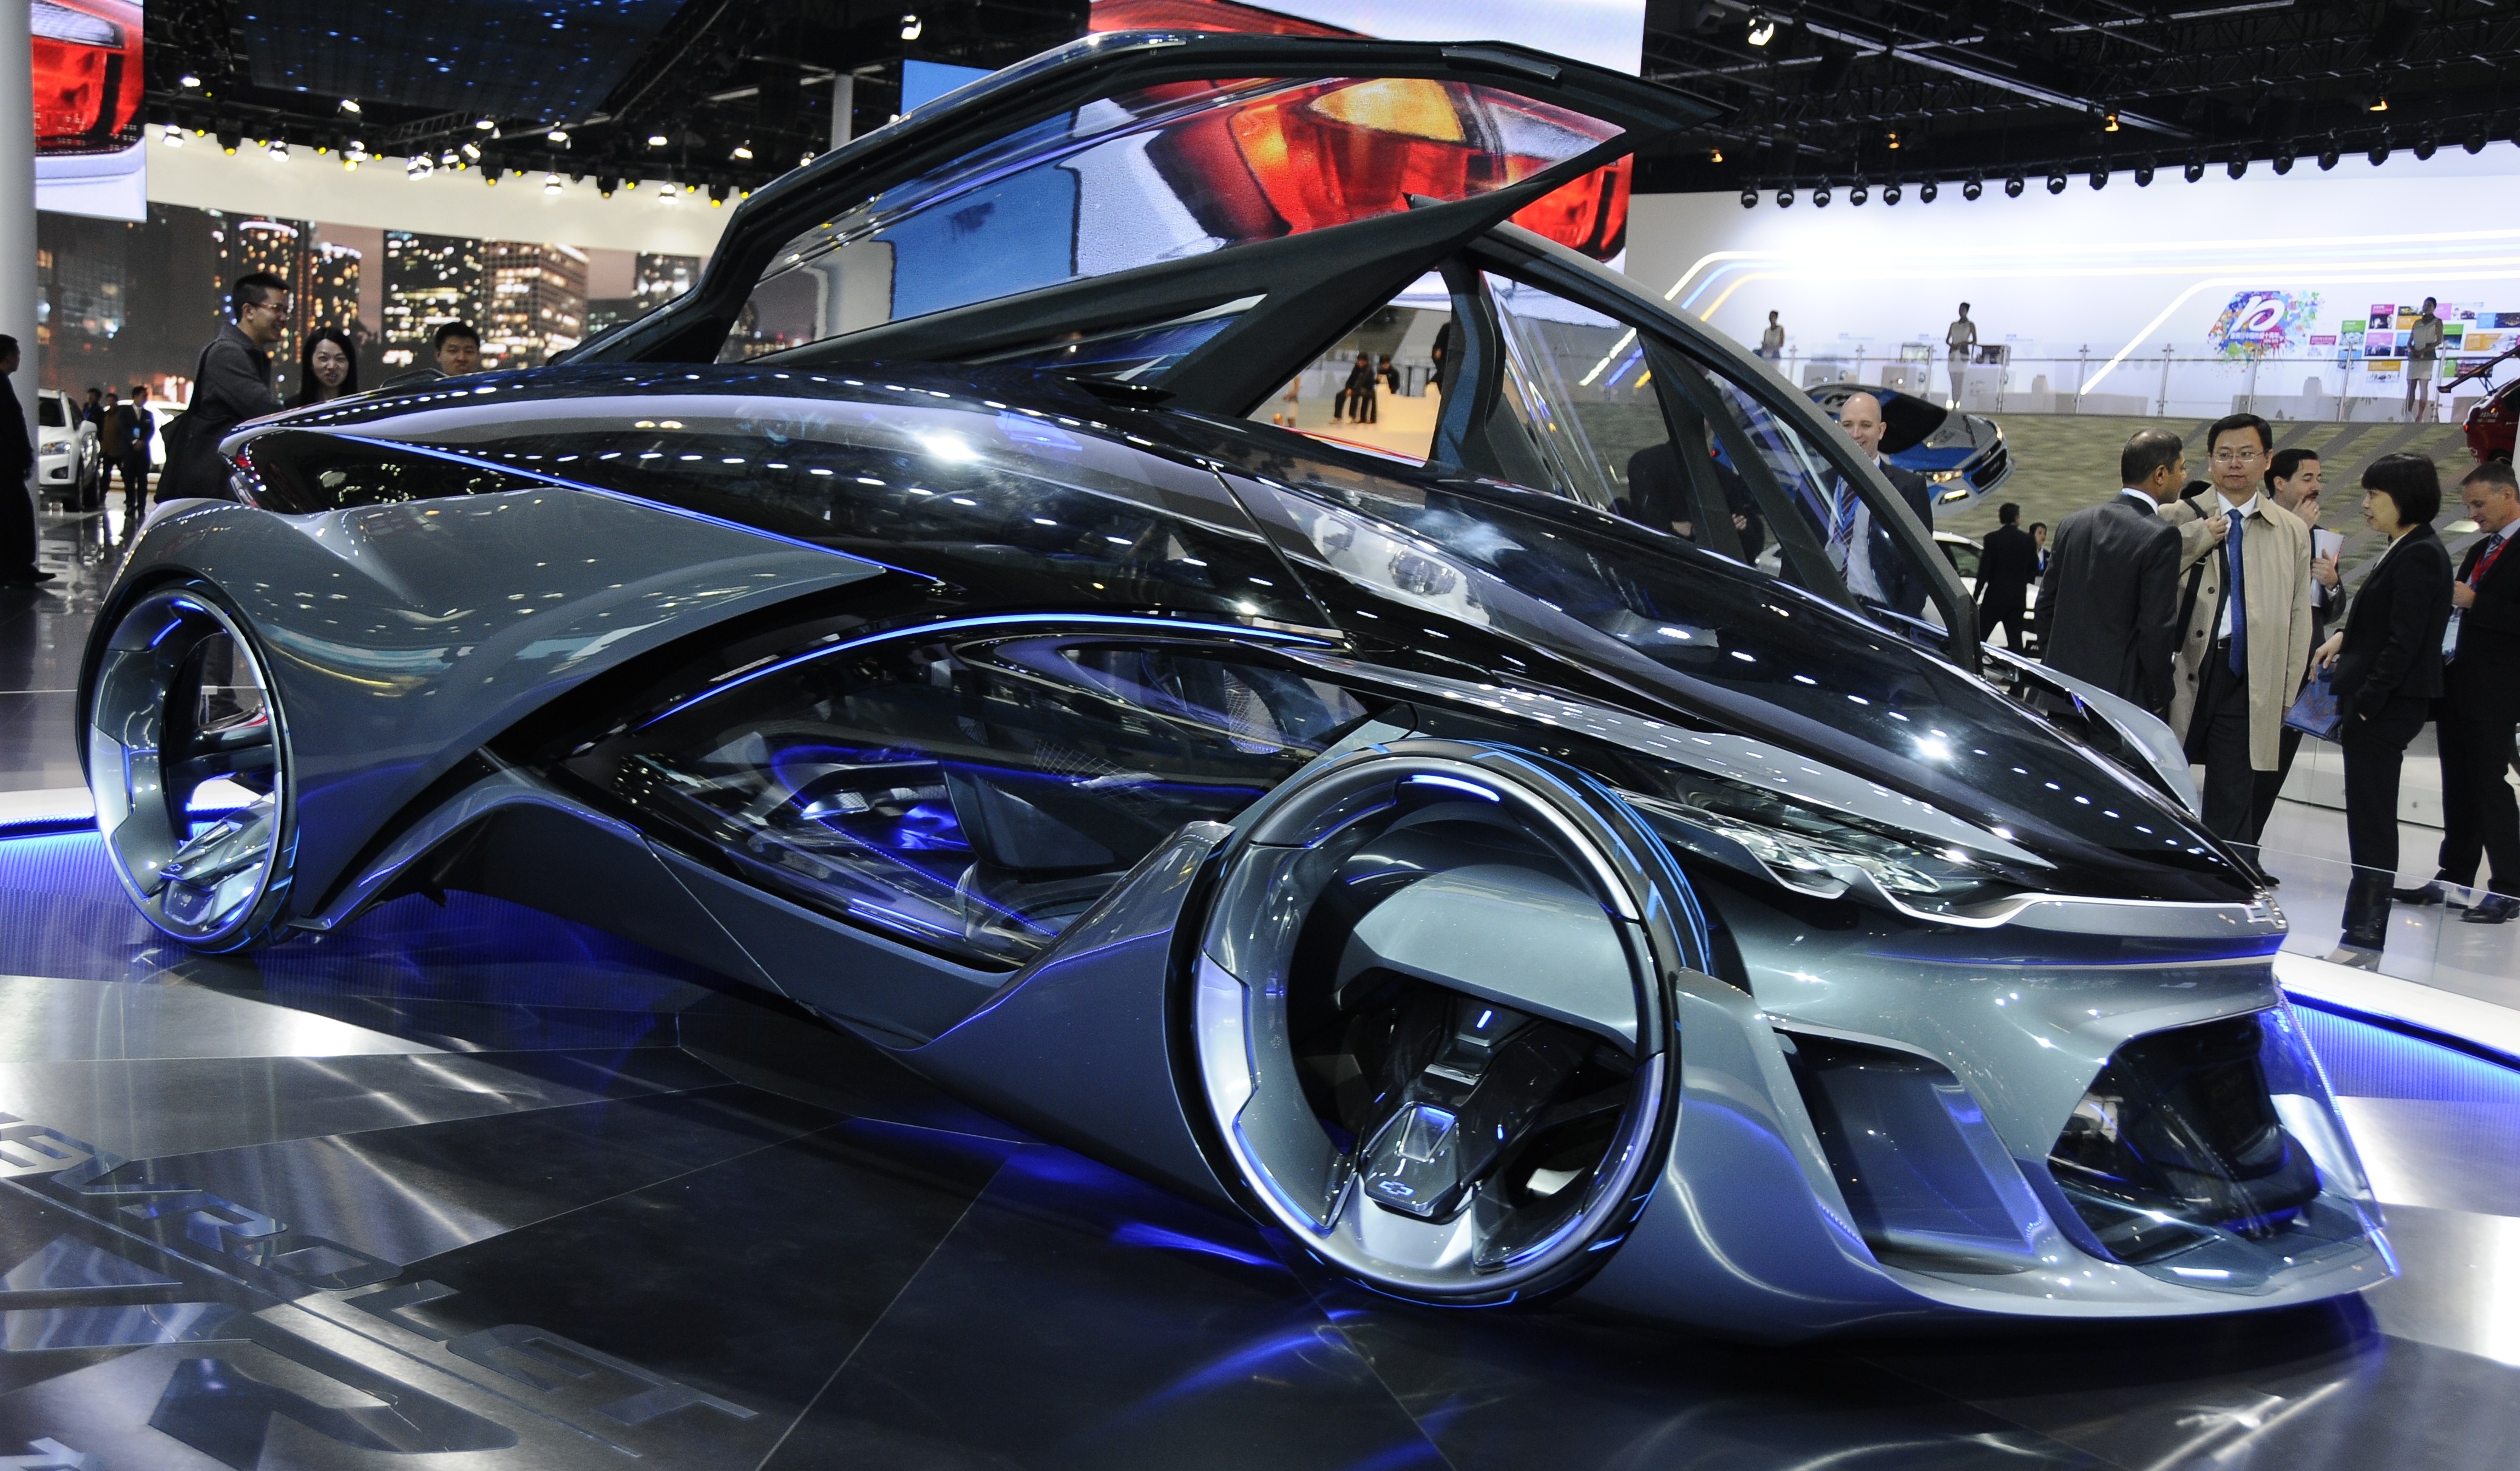 GM showed the future electric car ChevroletFNR with autopilot